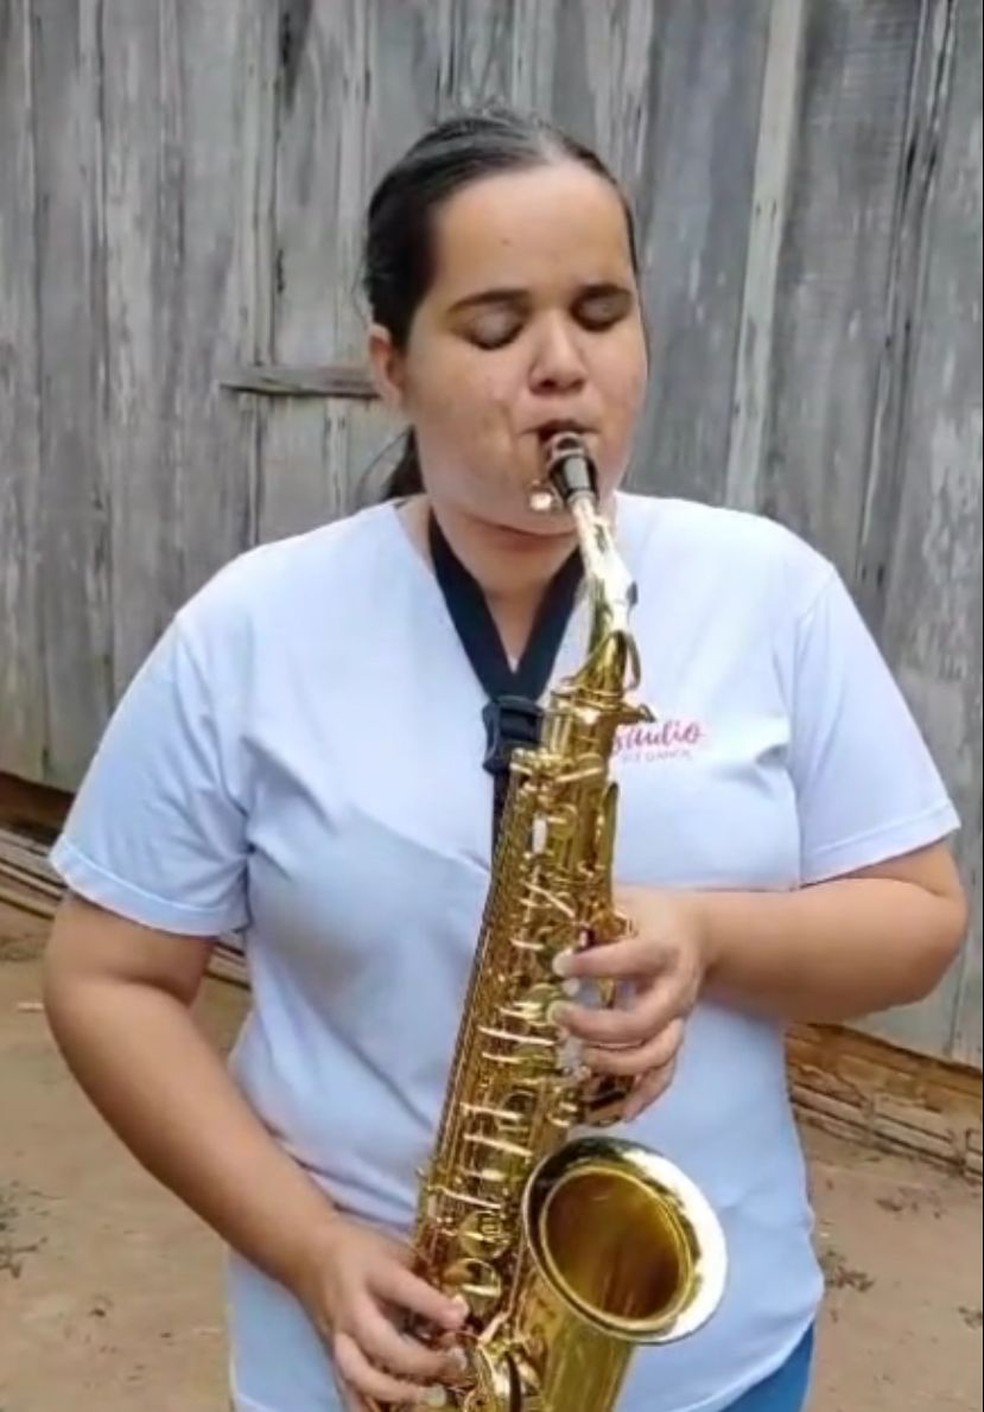 Como hobby, Cristina toca saxofone desde pequena e no esconde o amor pela msica  Foto: Reproduo